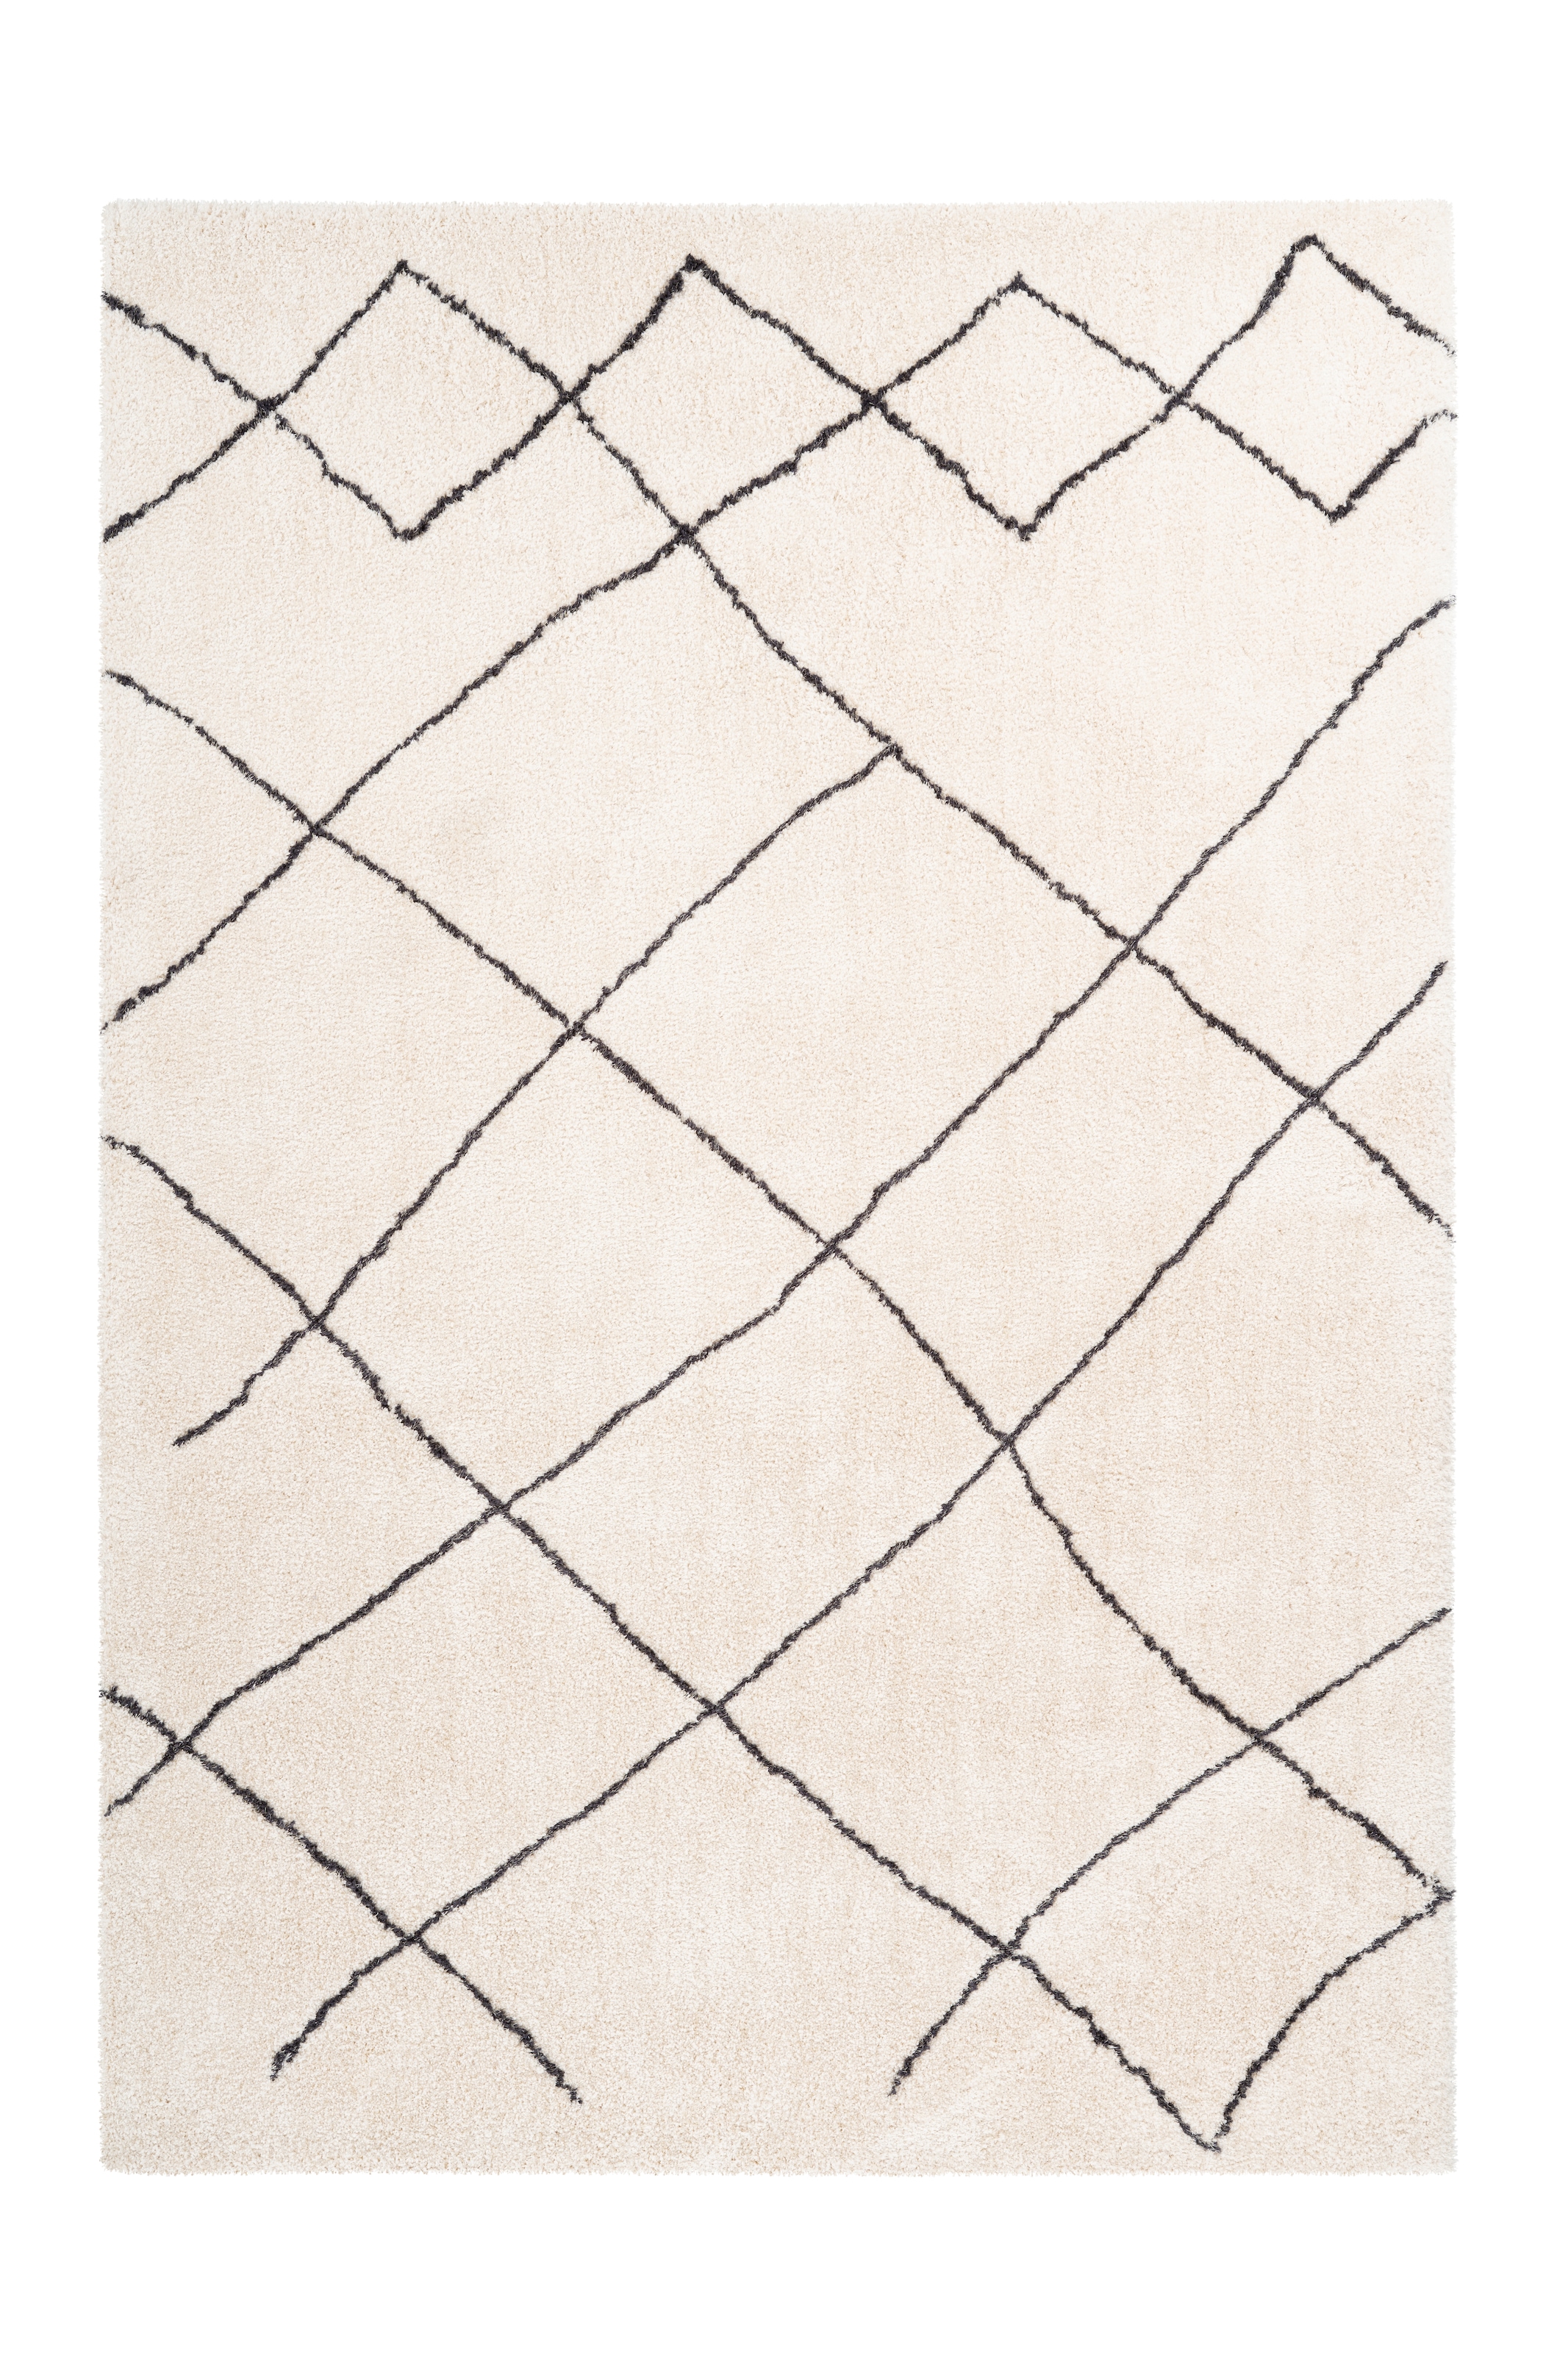 me gusta Teppich »Orlando 525«, rechteckig, Attraktives Muster, Retrolook,Baumwollrücken, Fußbodenheizung geeignet